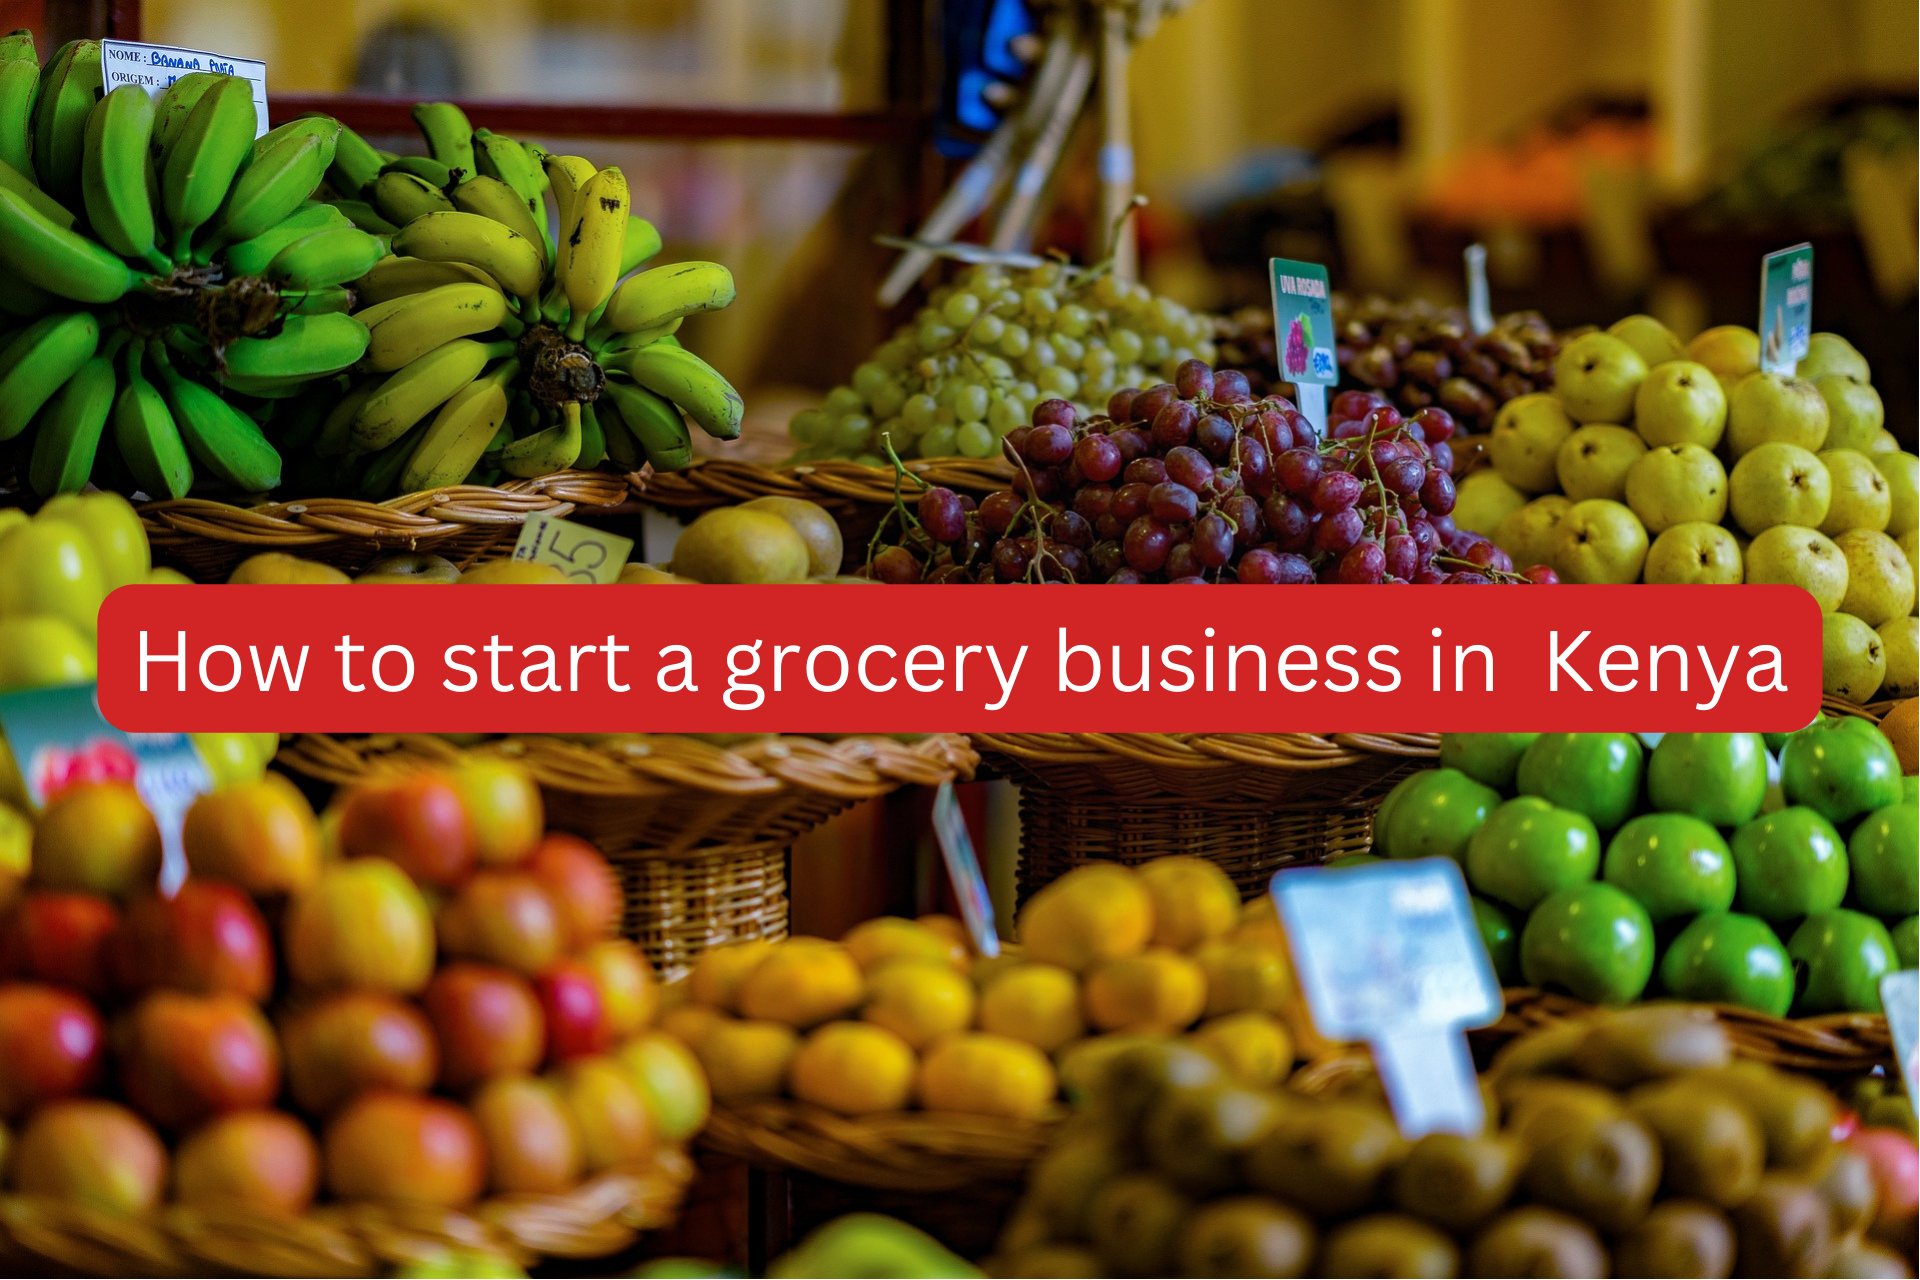 Grocery business in Kenya